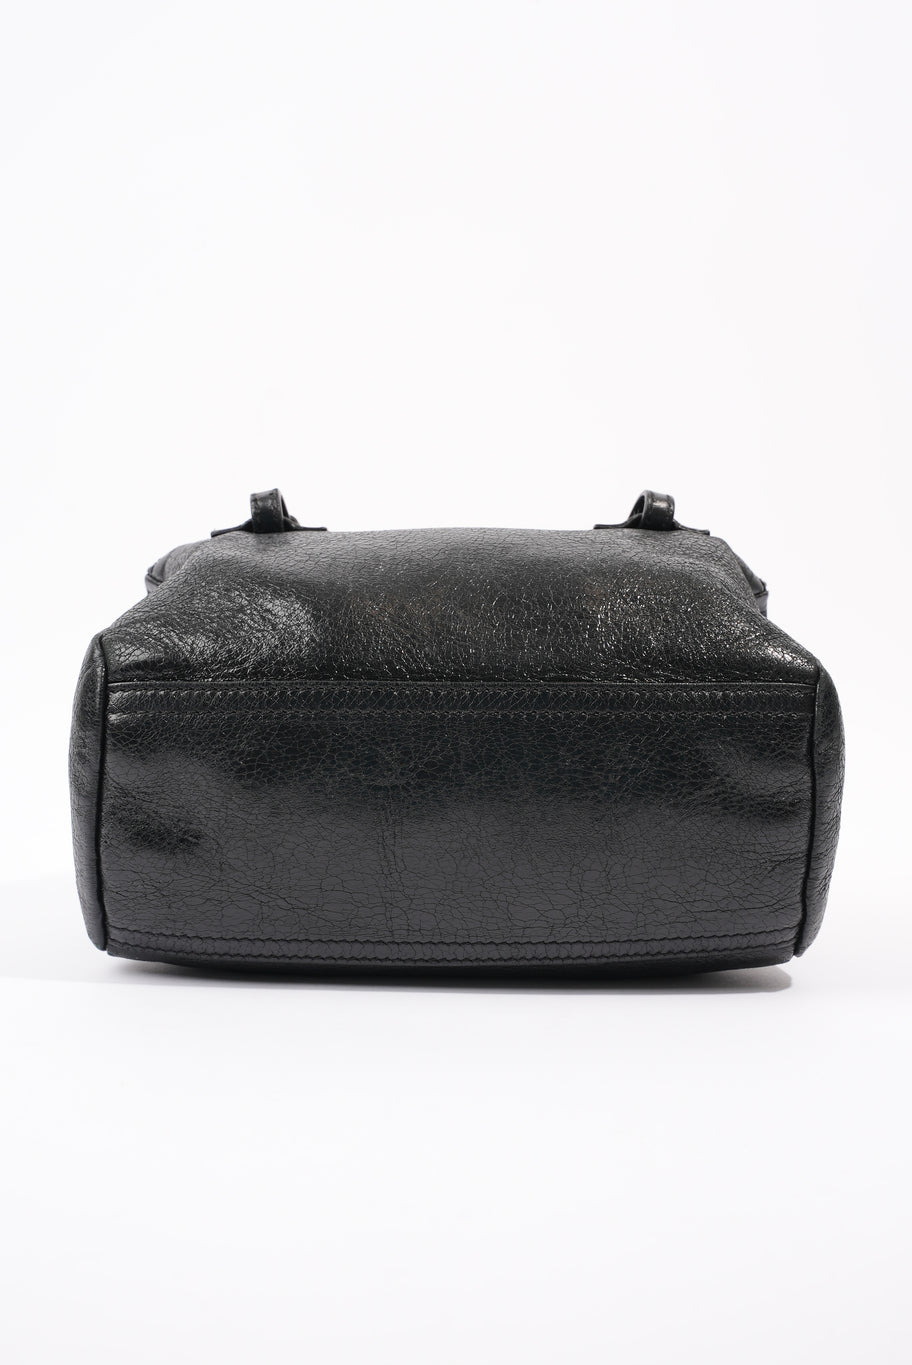 Pandora Bag Black Leather Small Image 4